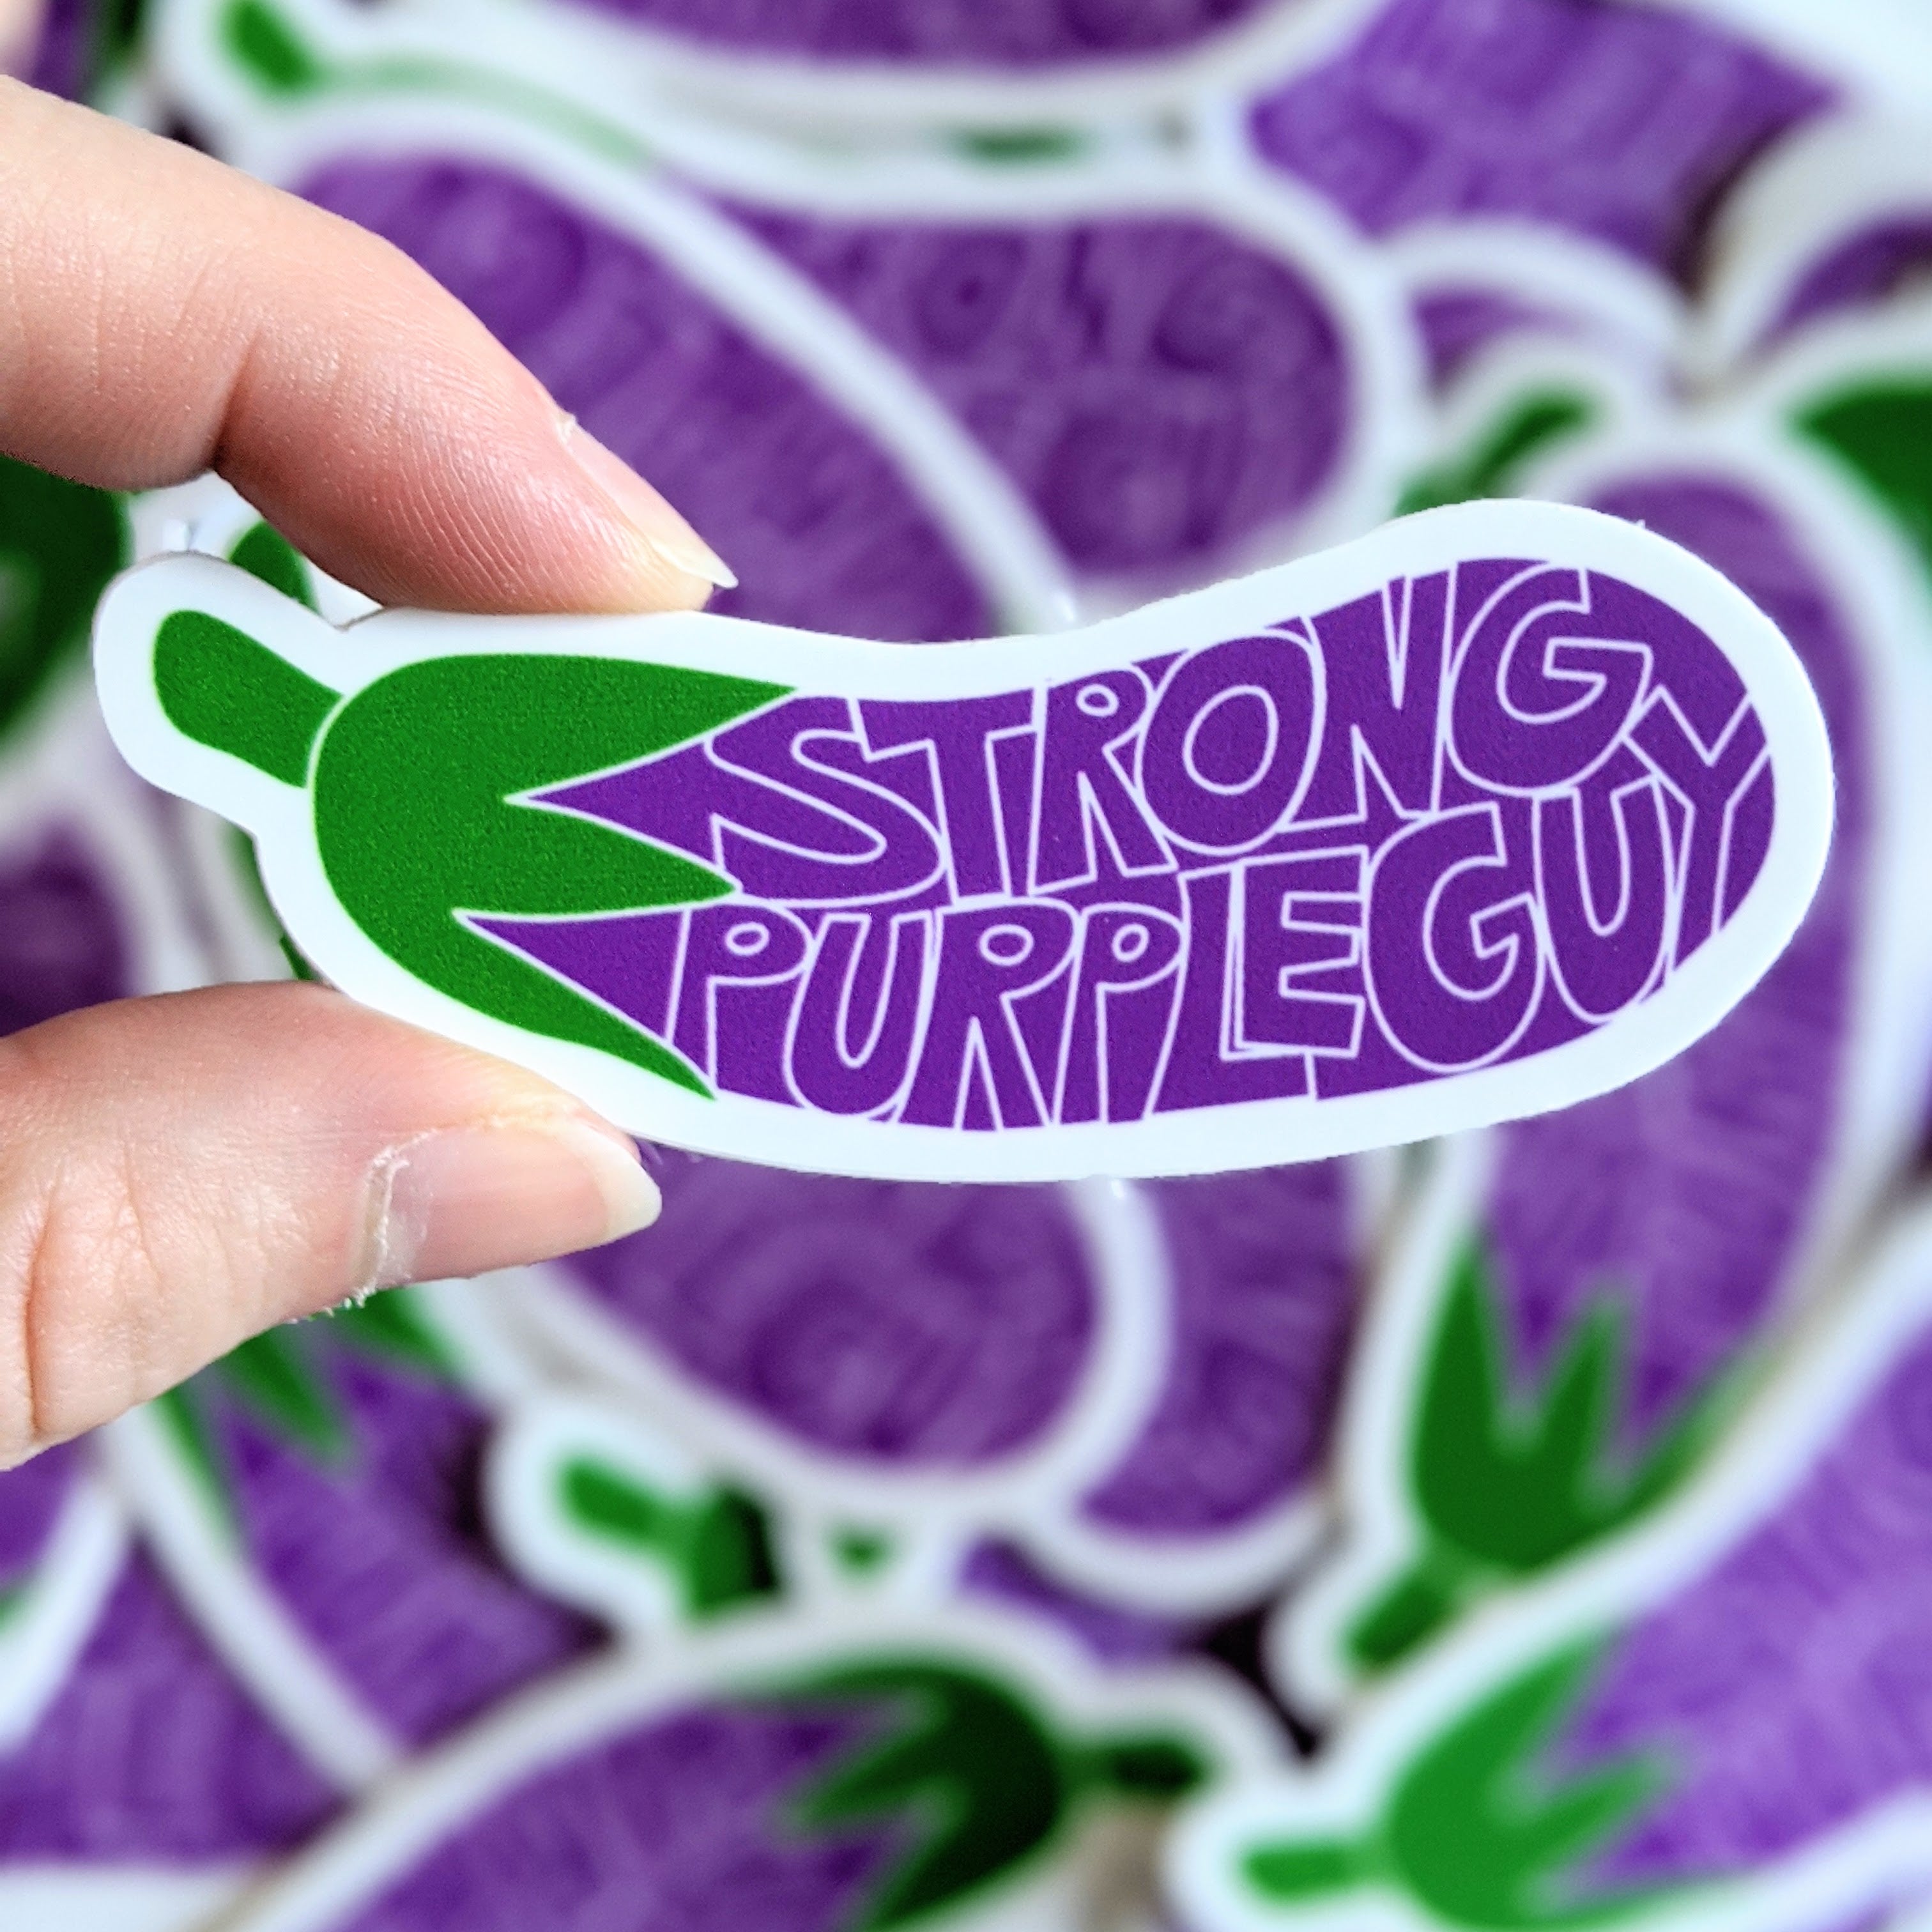 Strong Purple Guy sticker